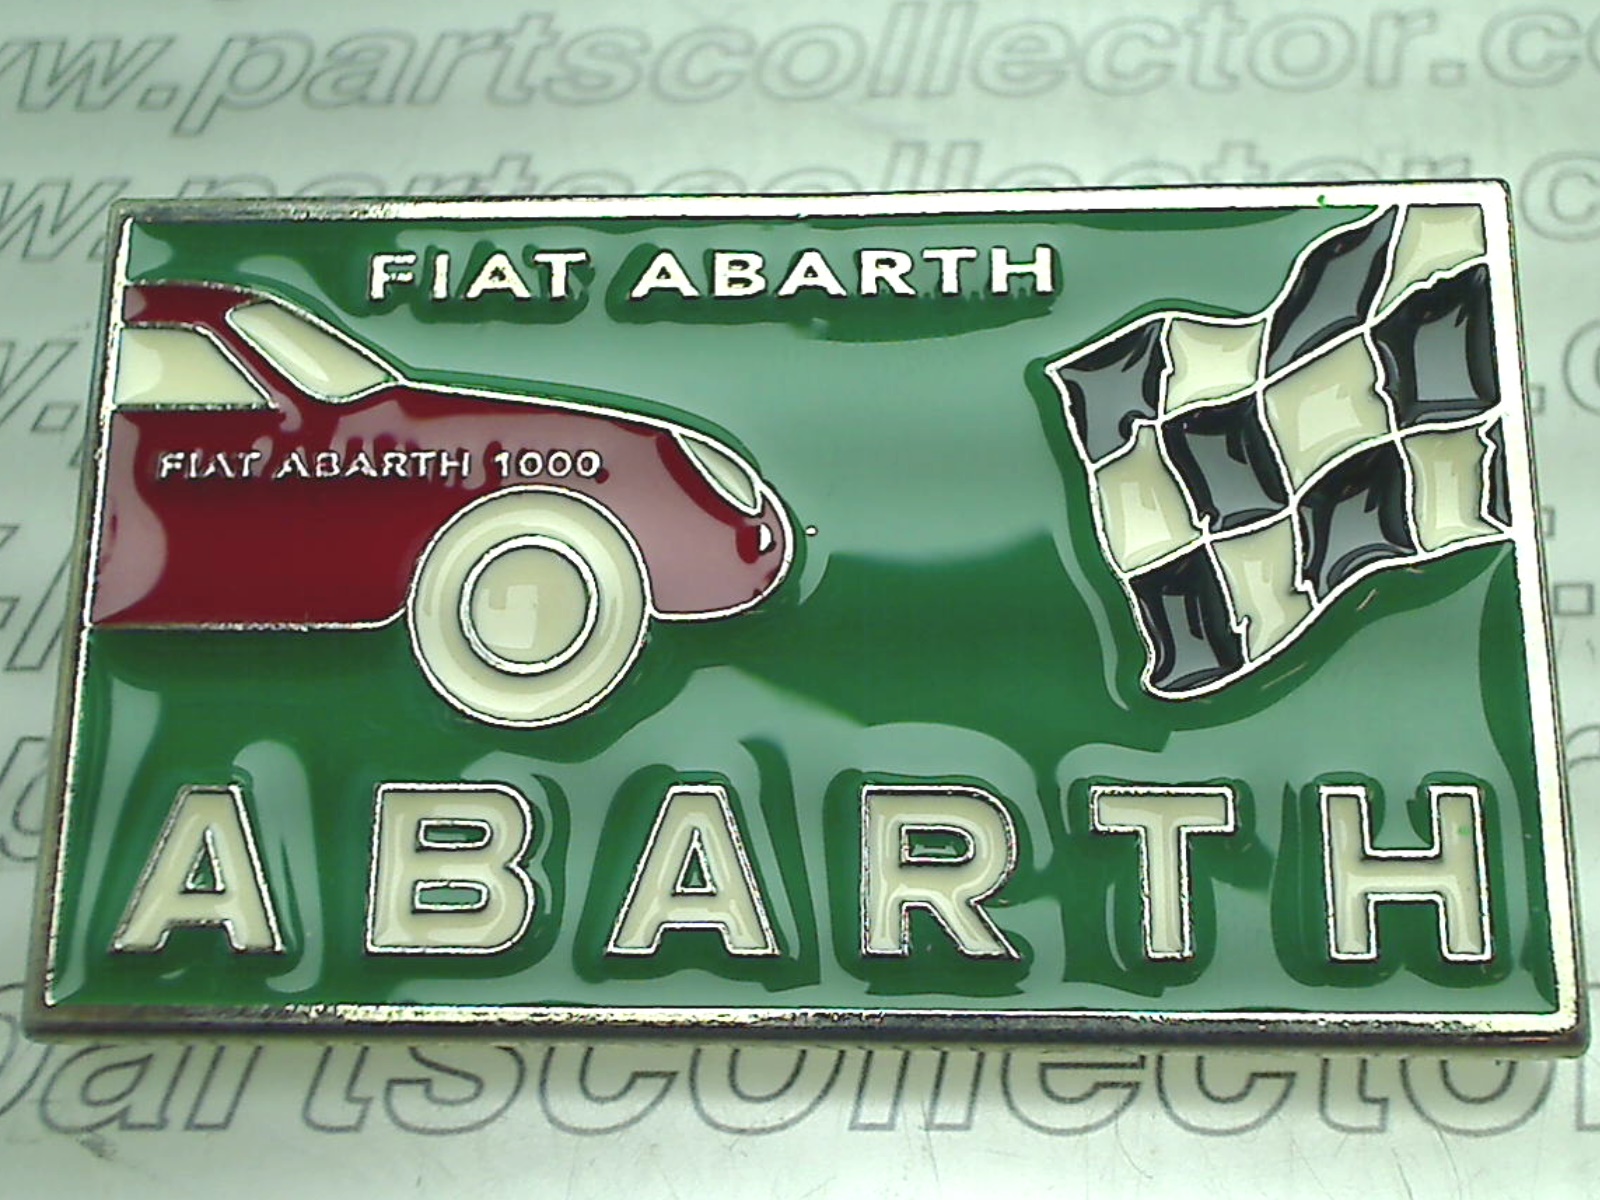 FIAT ABARTH 1000 MEDAL